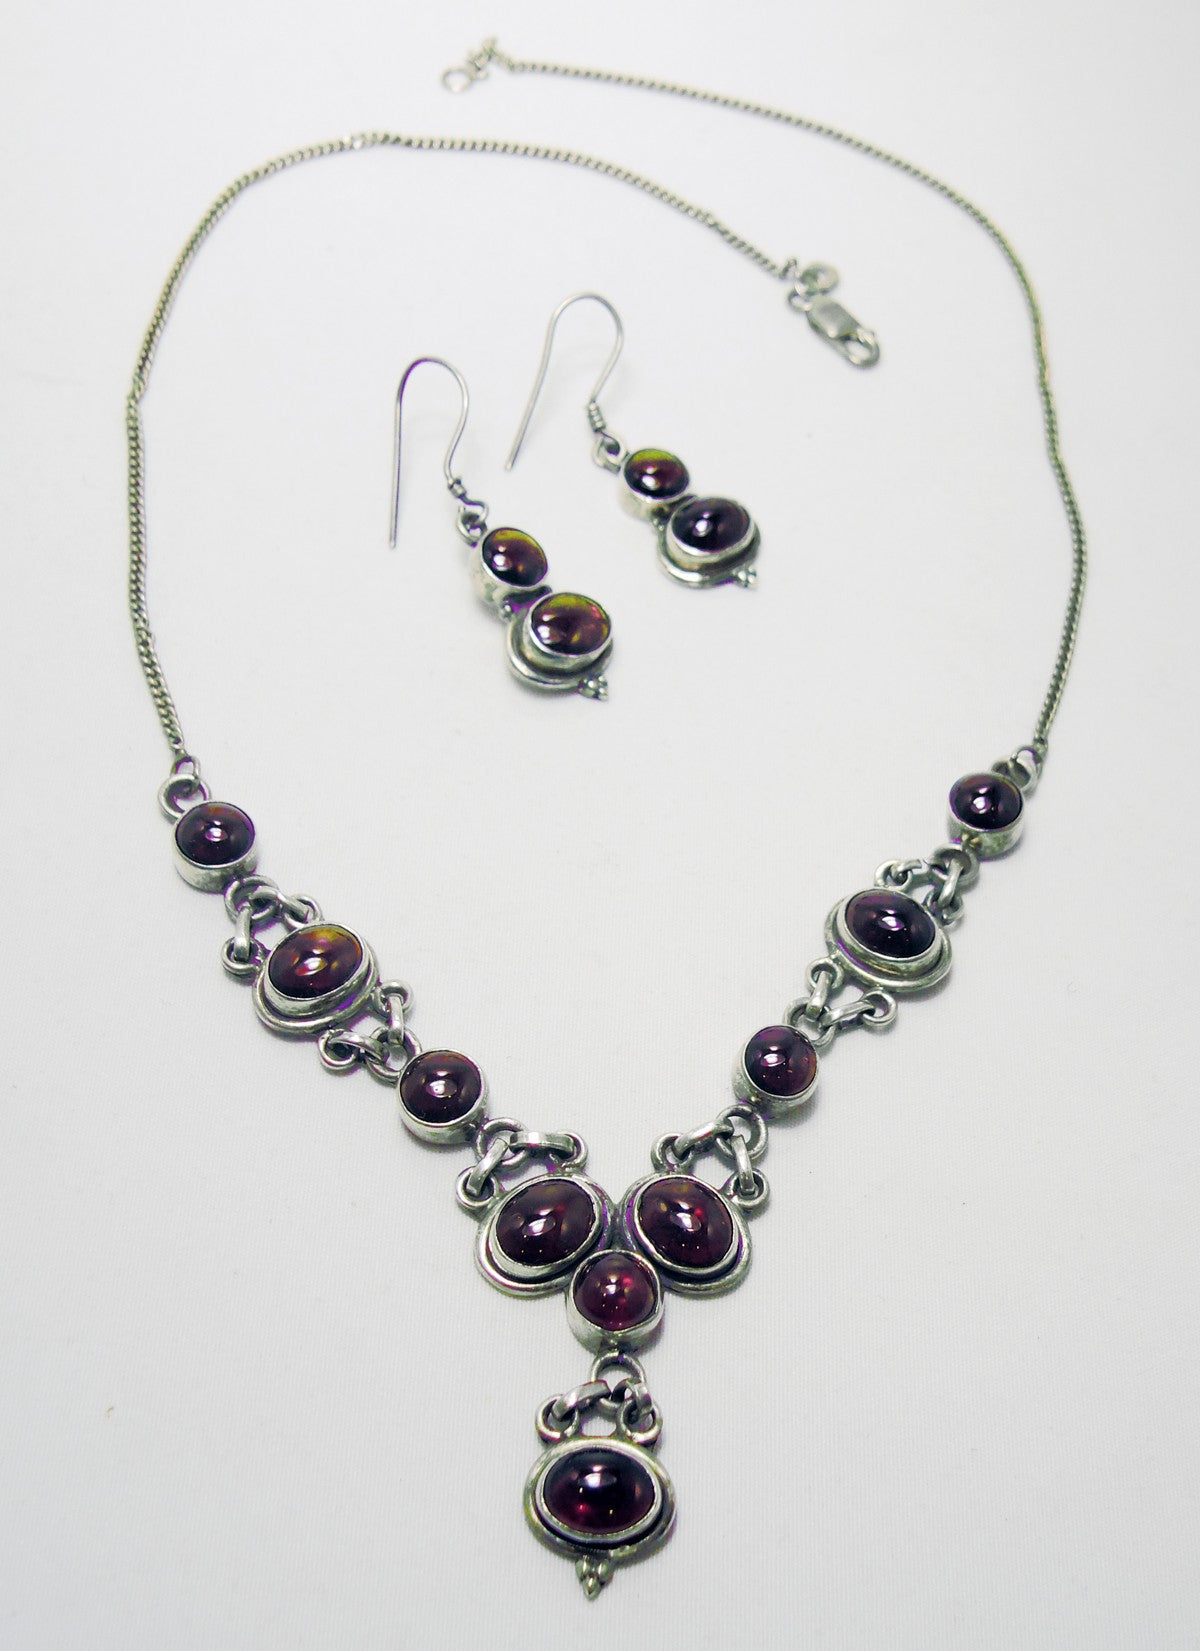 Antique Georgian Vivid Garnet Necklace | Garnet jewelry, Vintage jewelry,  Jewelry design